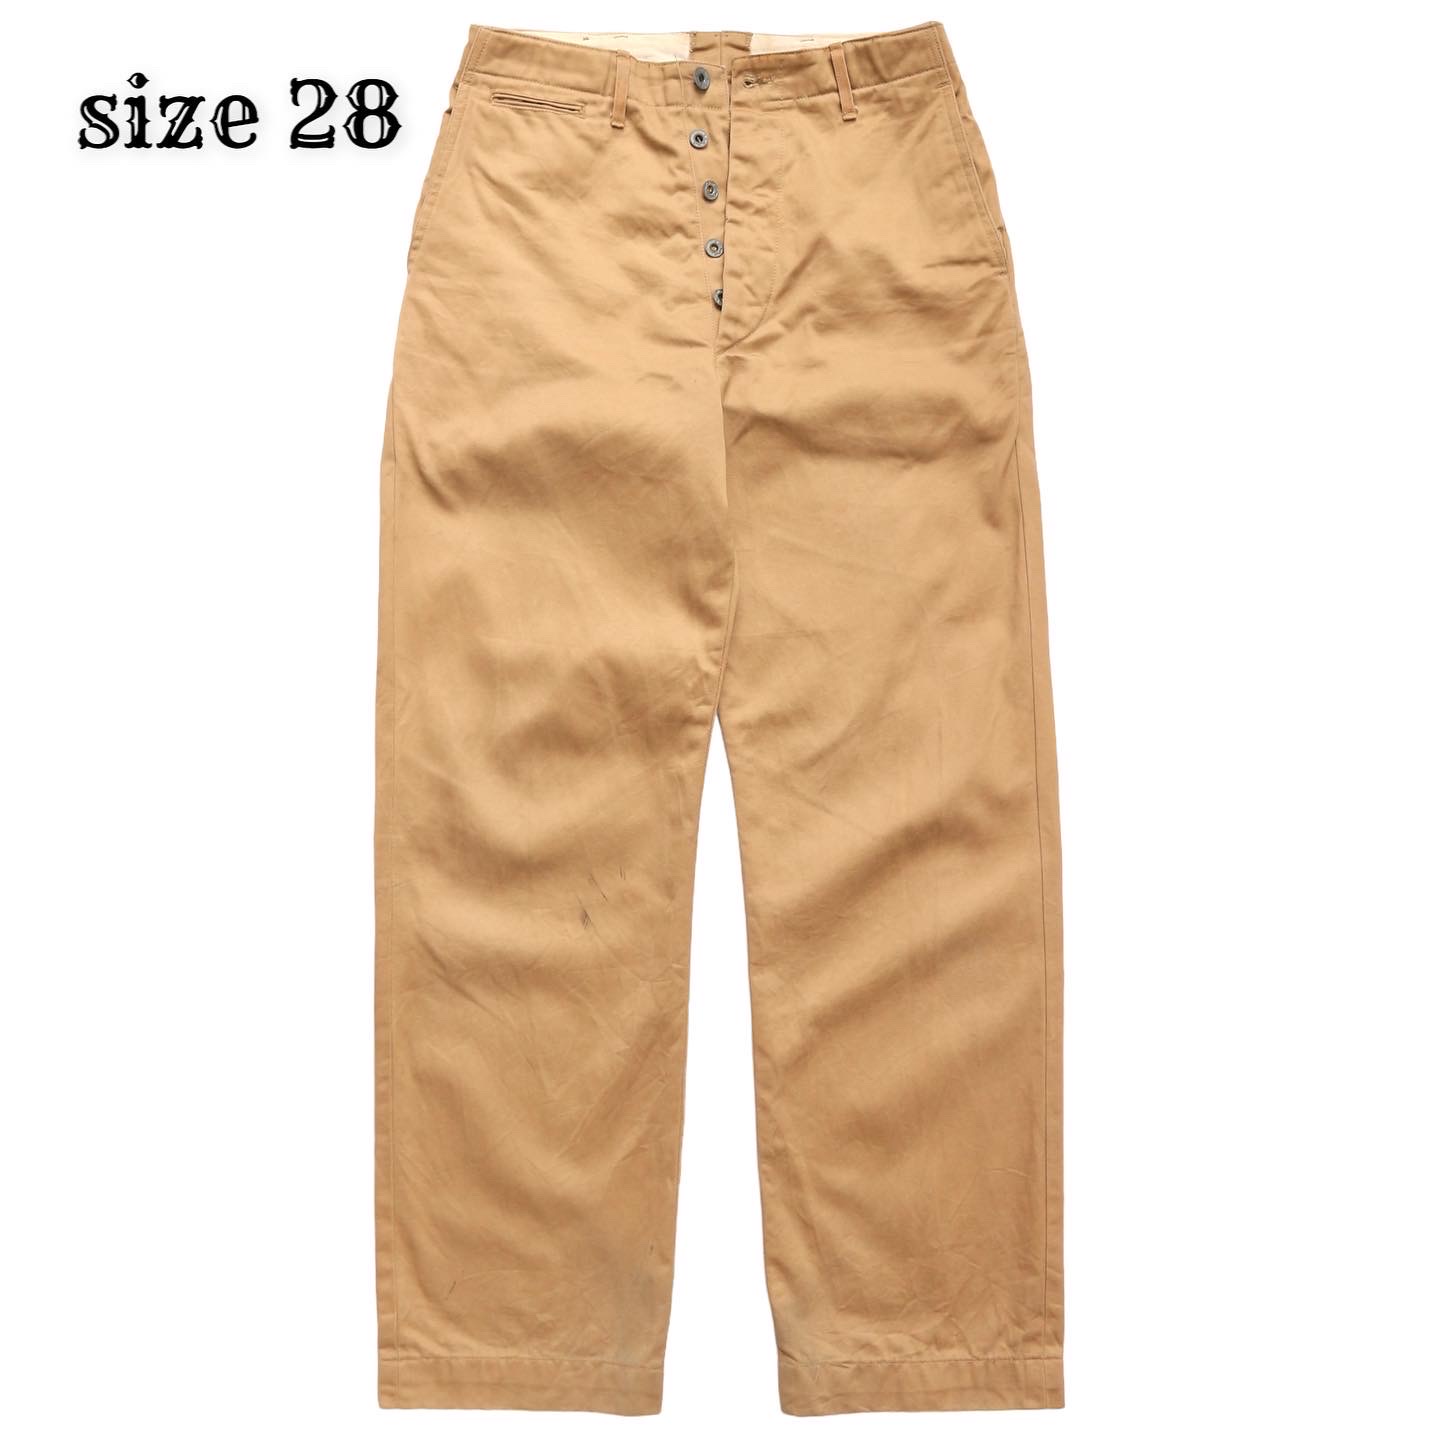 Buzz Rickson Officer Khaki Trousers Size 28